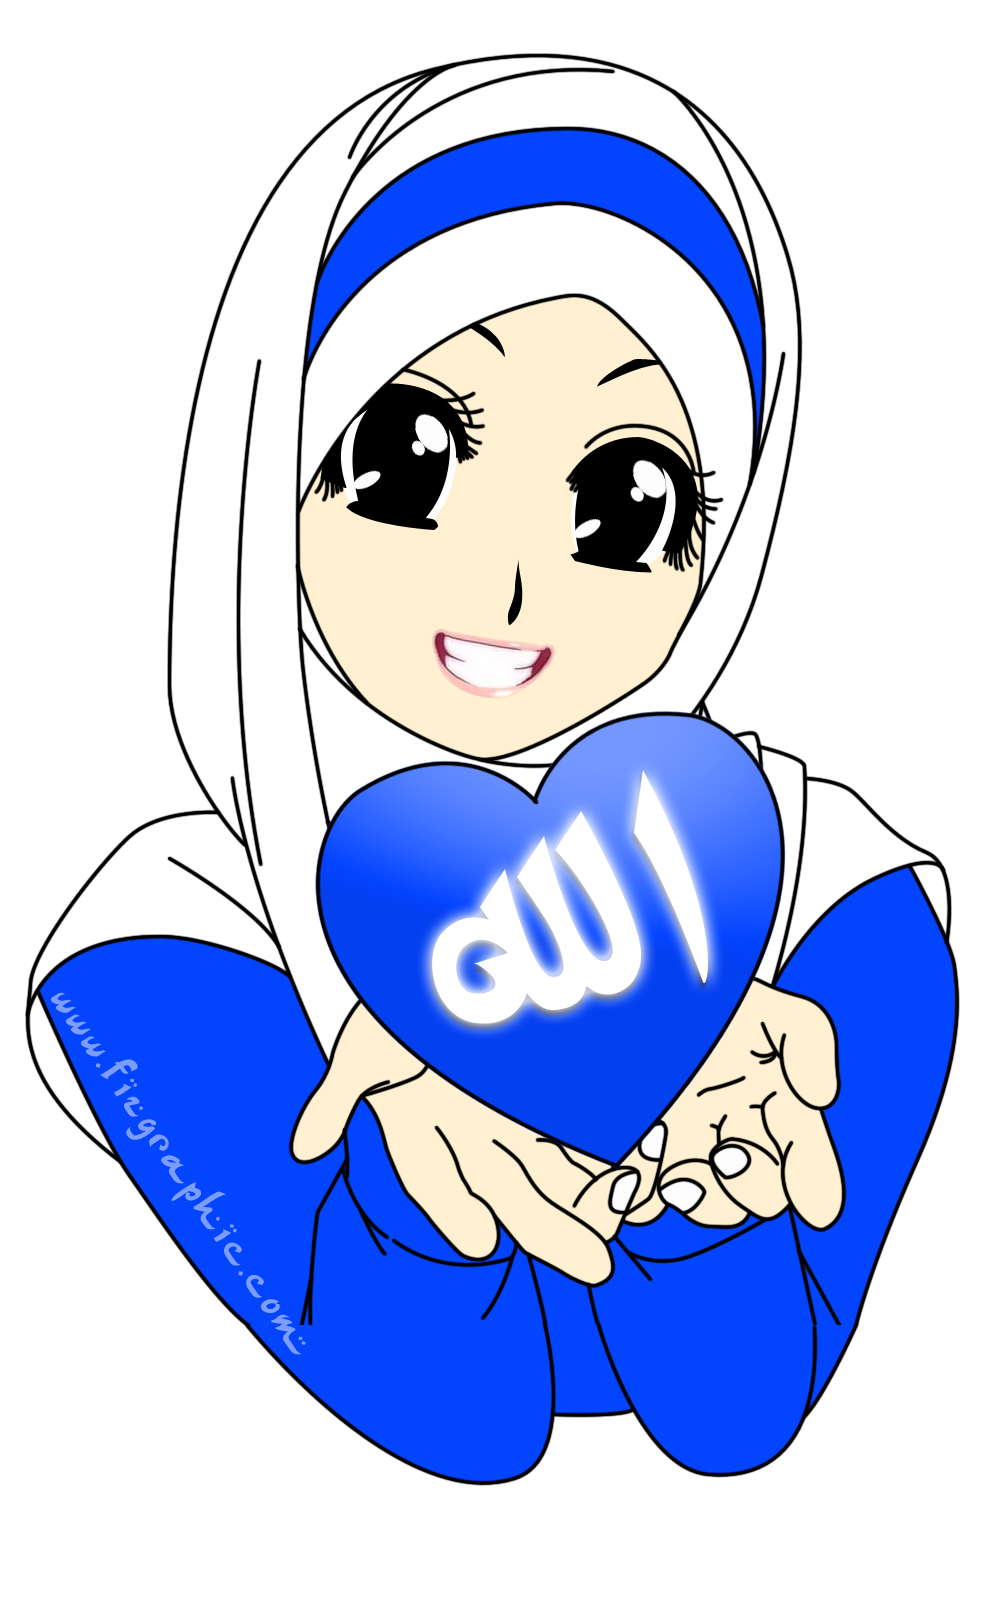 Gambar Kartun Muslimah Warna Biru Kolek Gambar